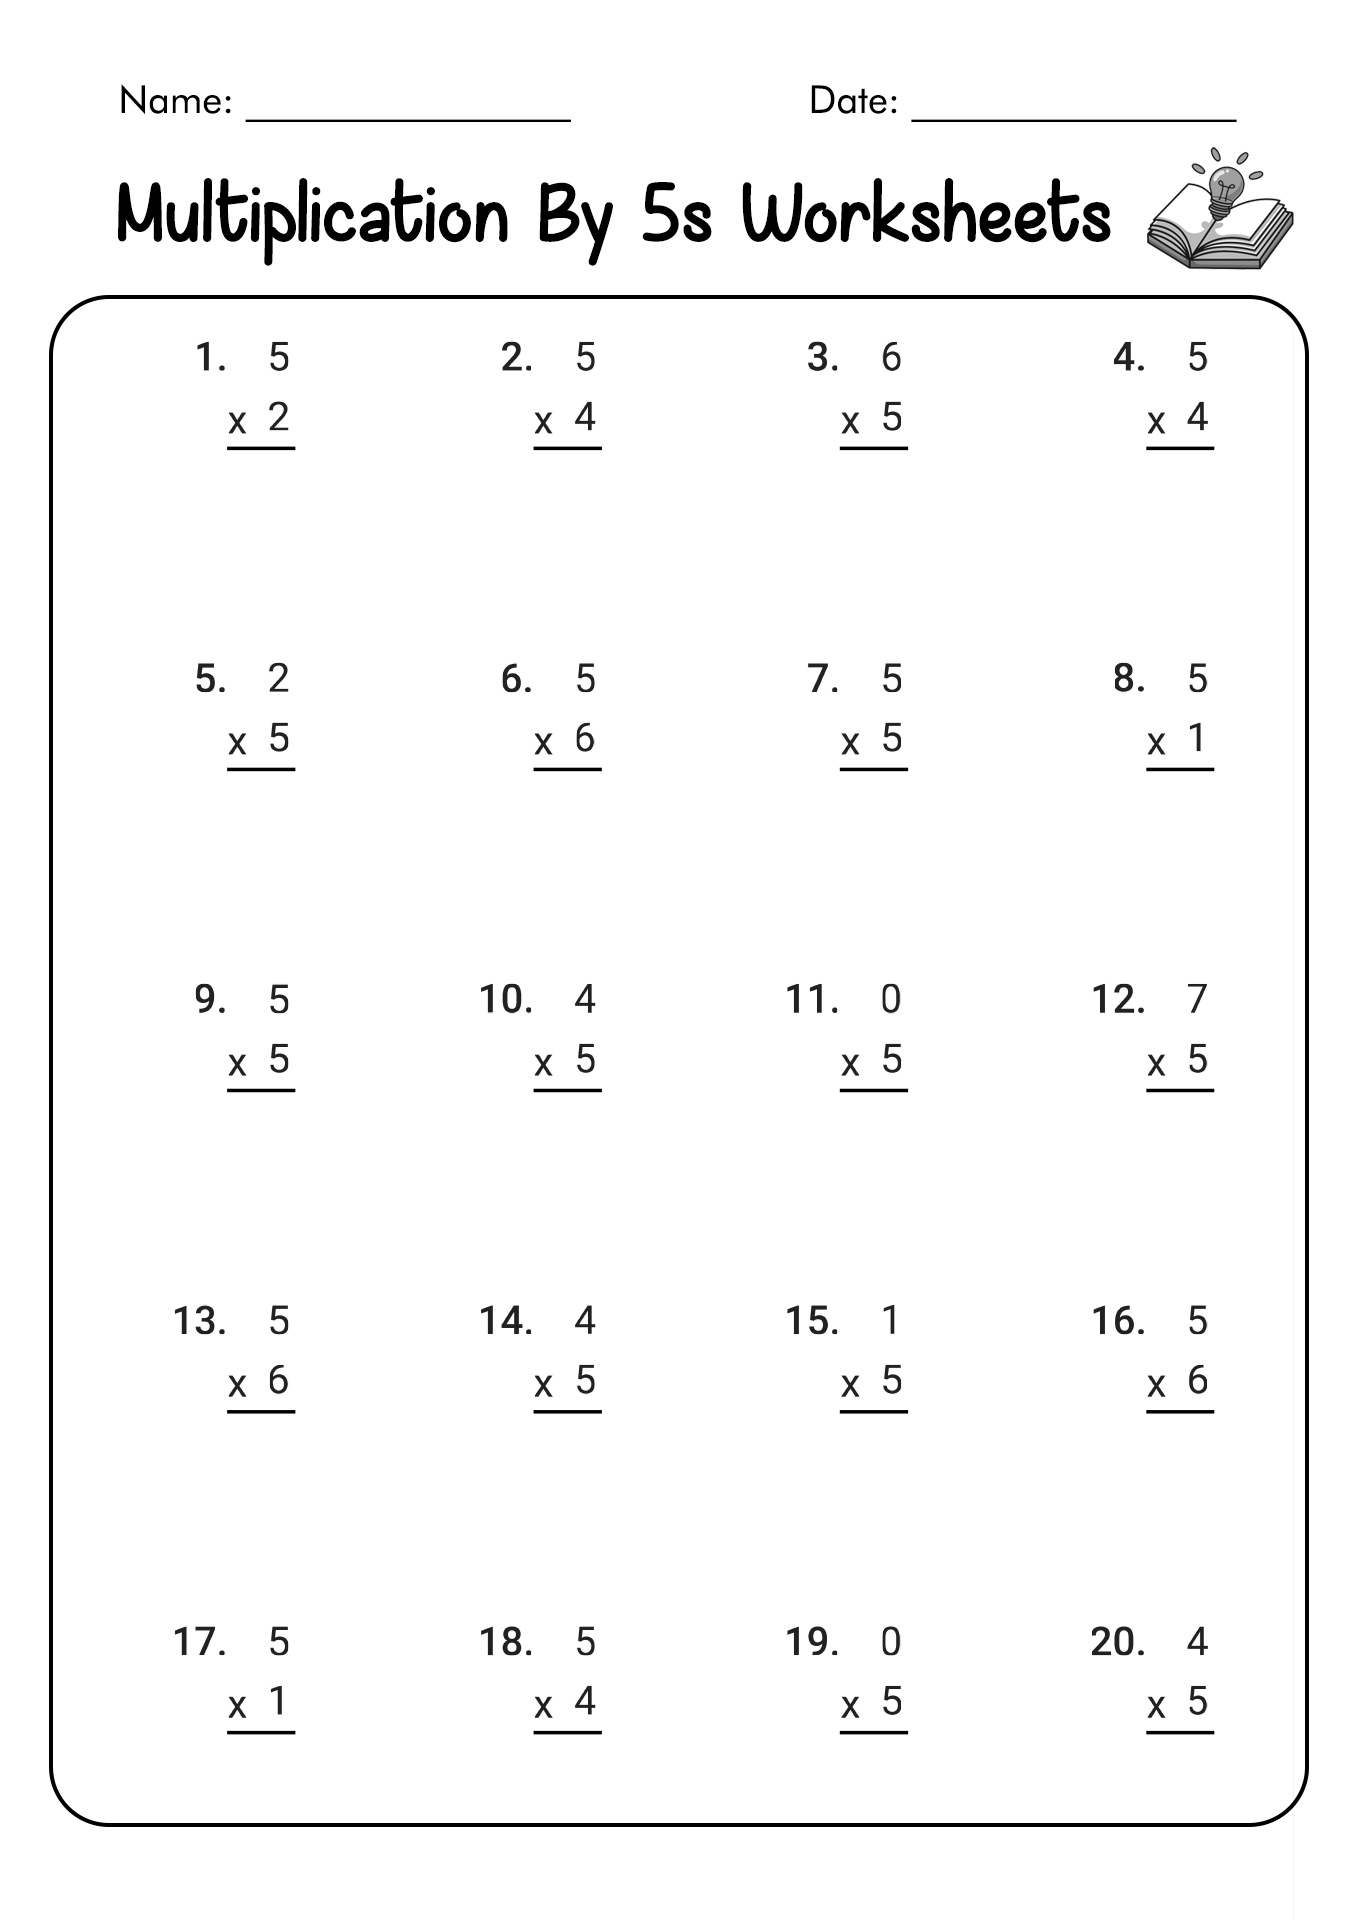 multiplication-worksheets-5s-times-tables-worksheets